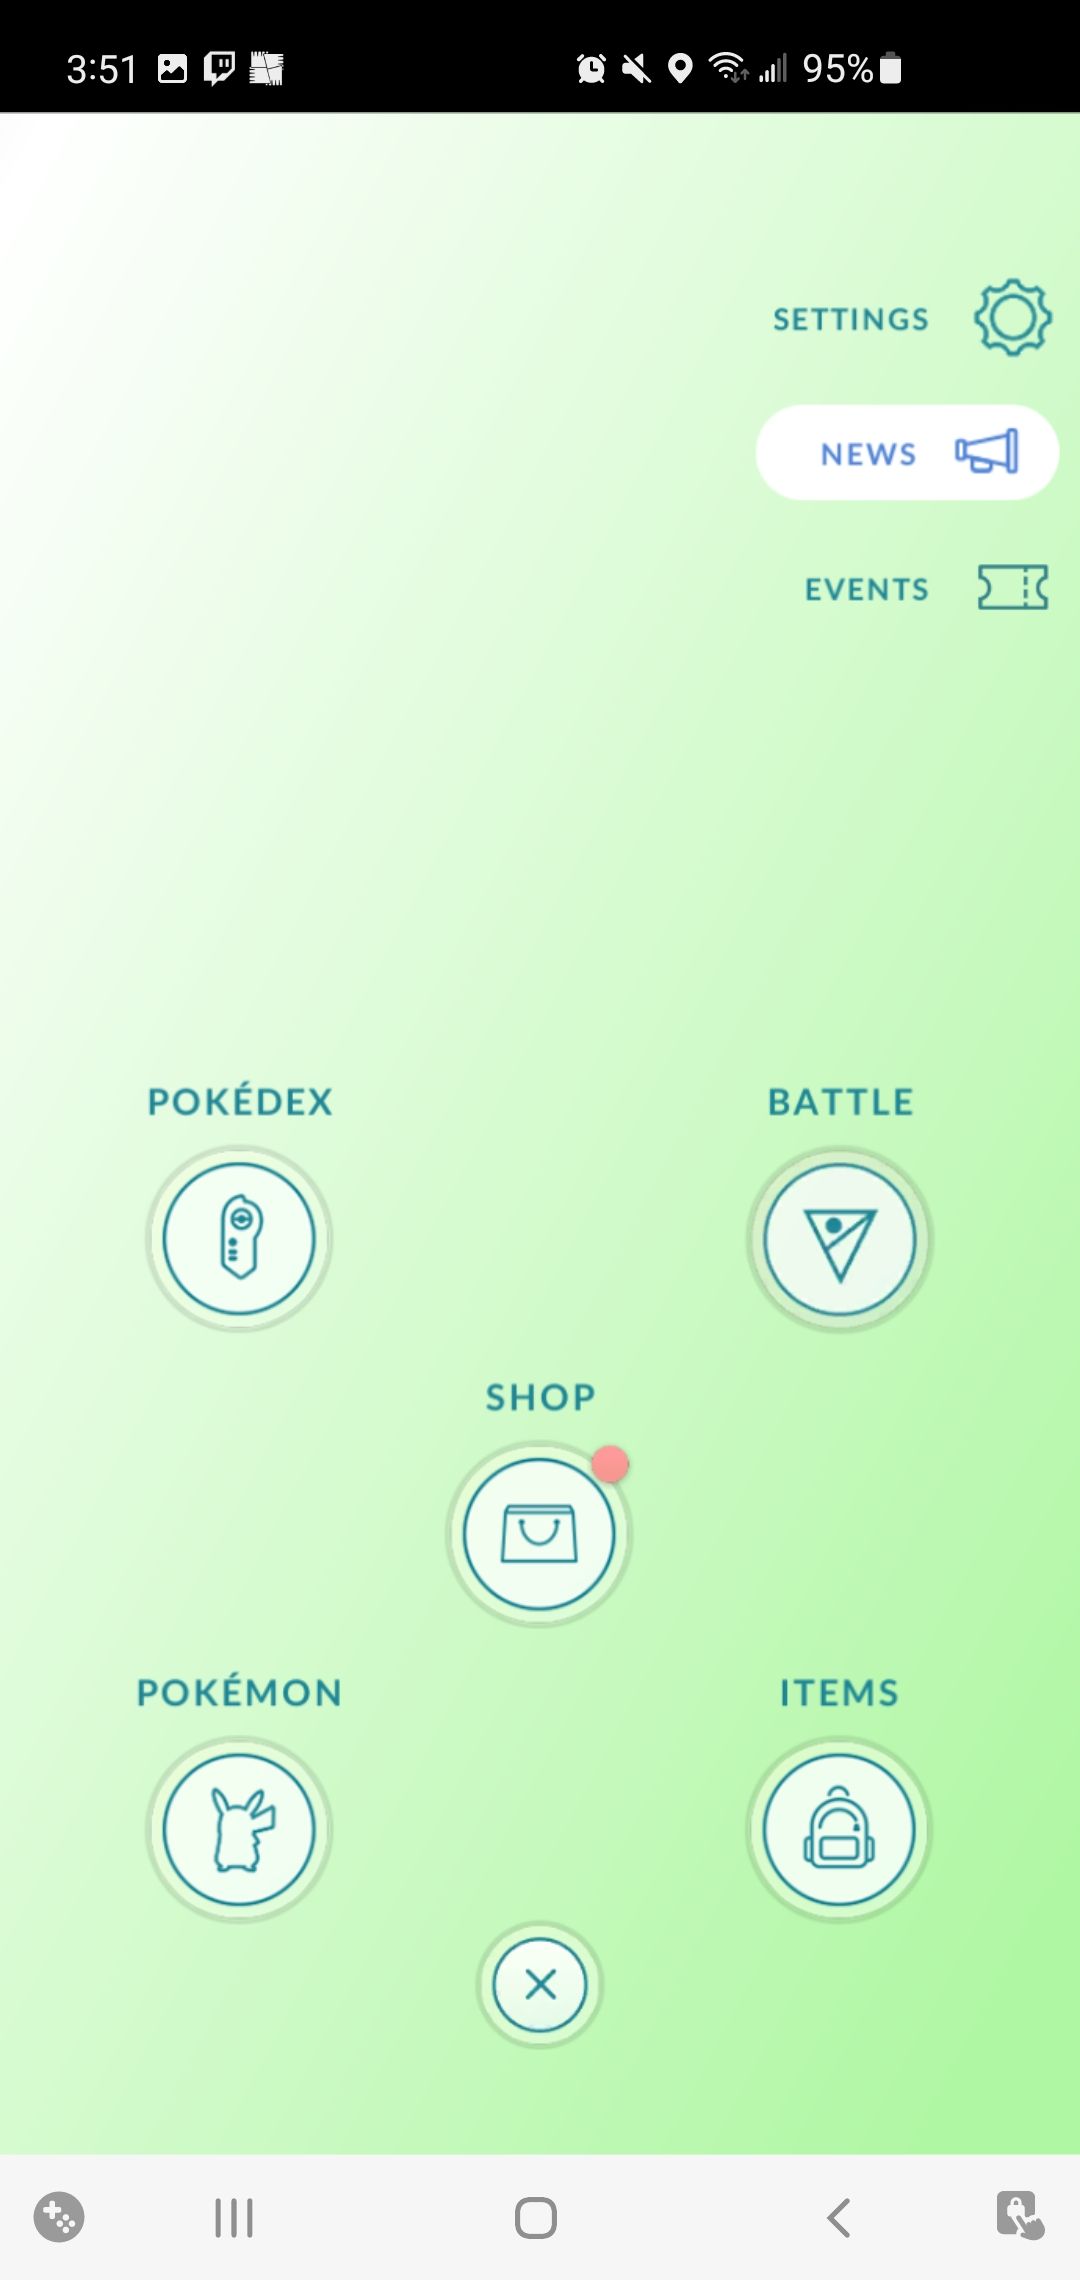 Screenshot of the Pokemon Go app's main menu